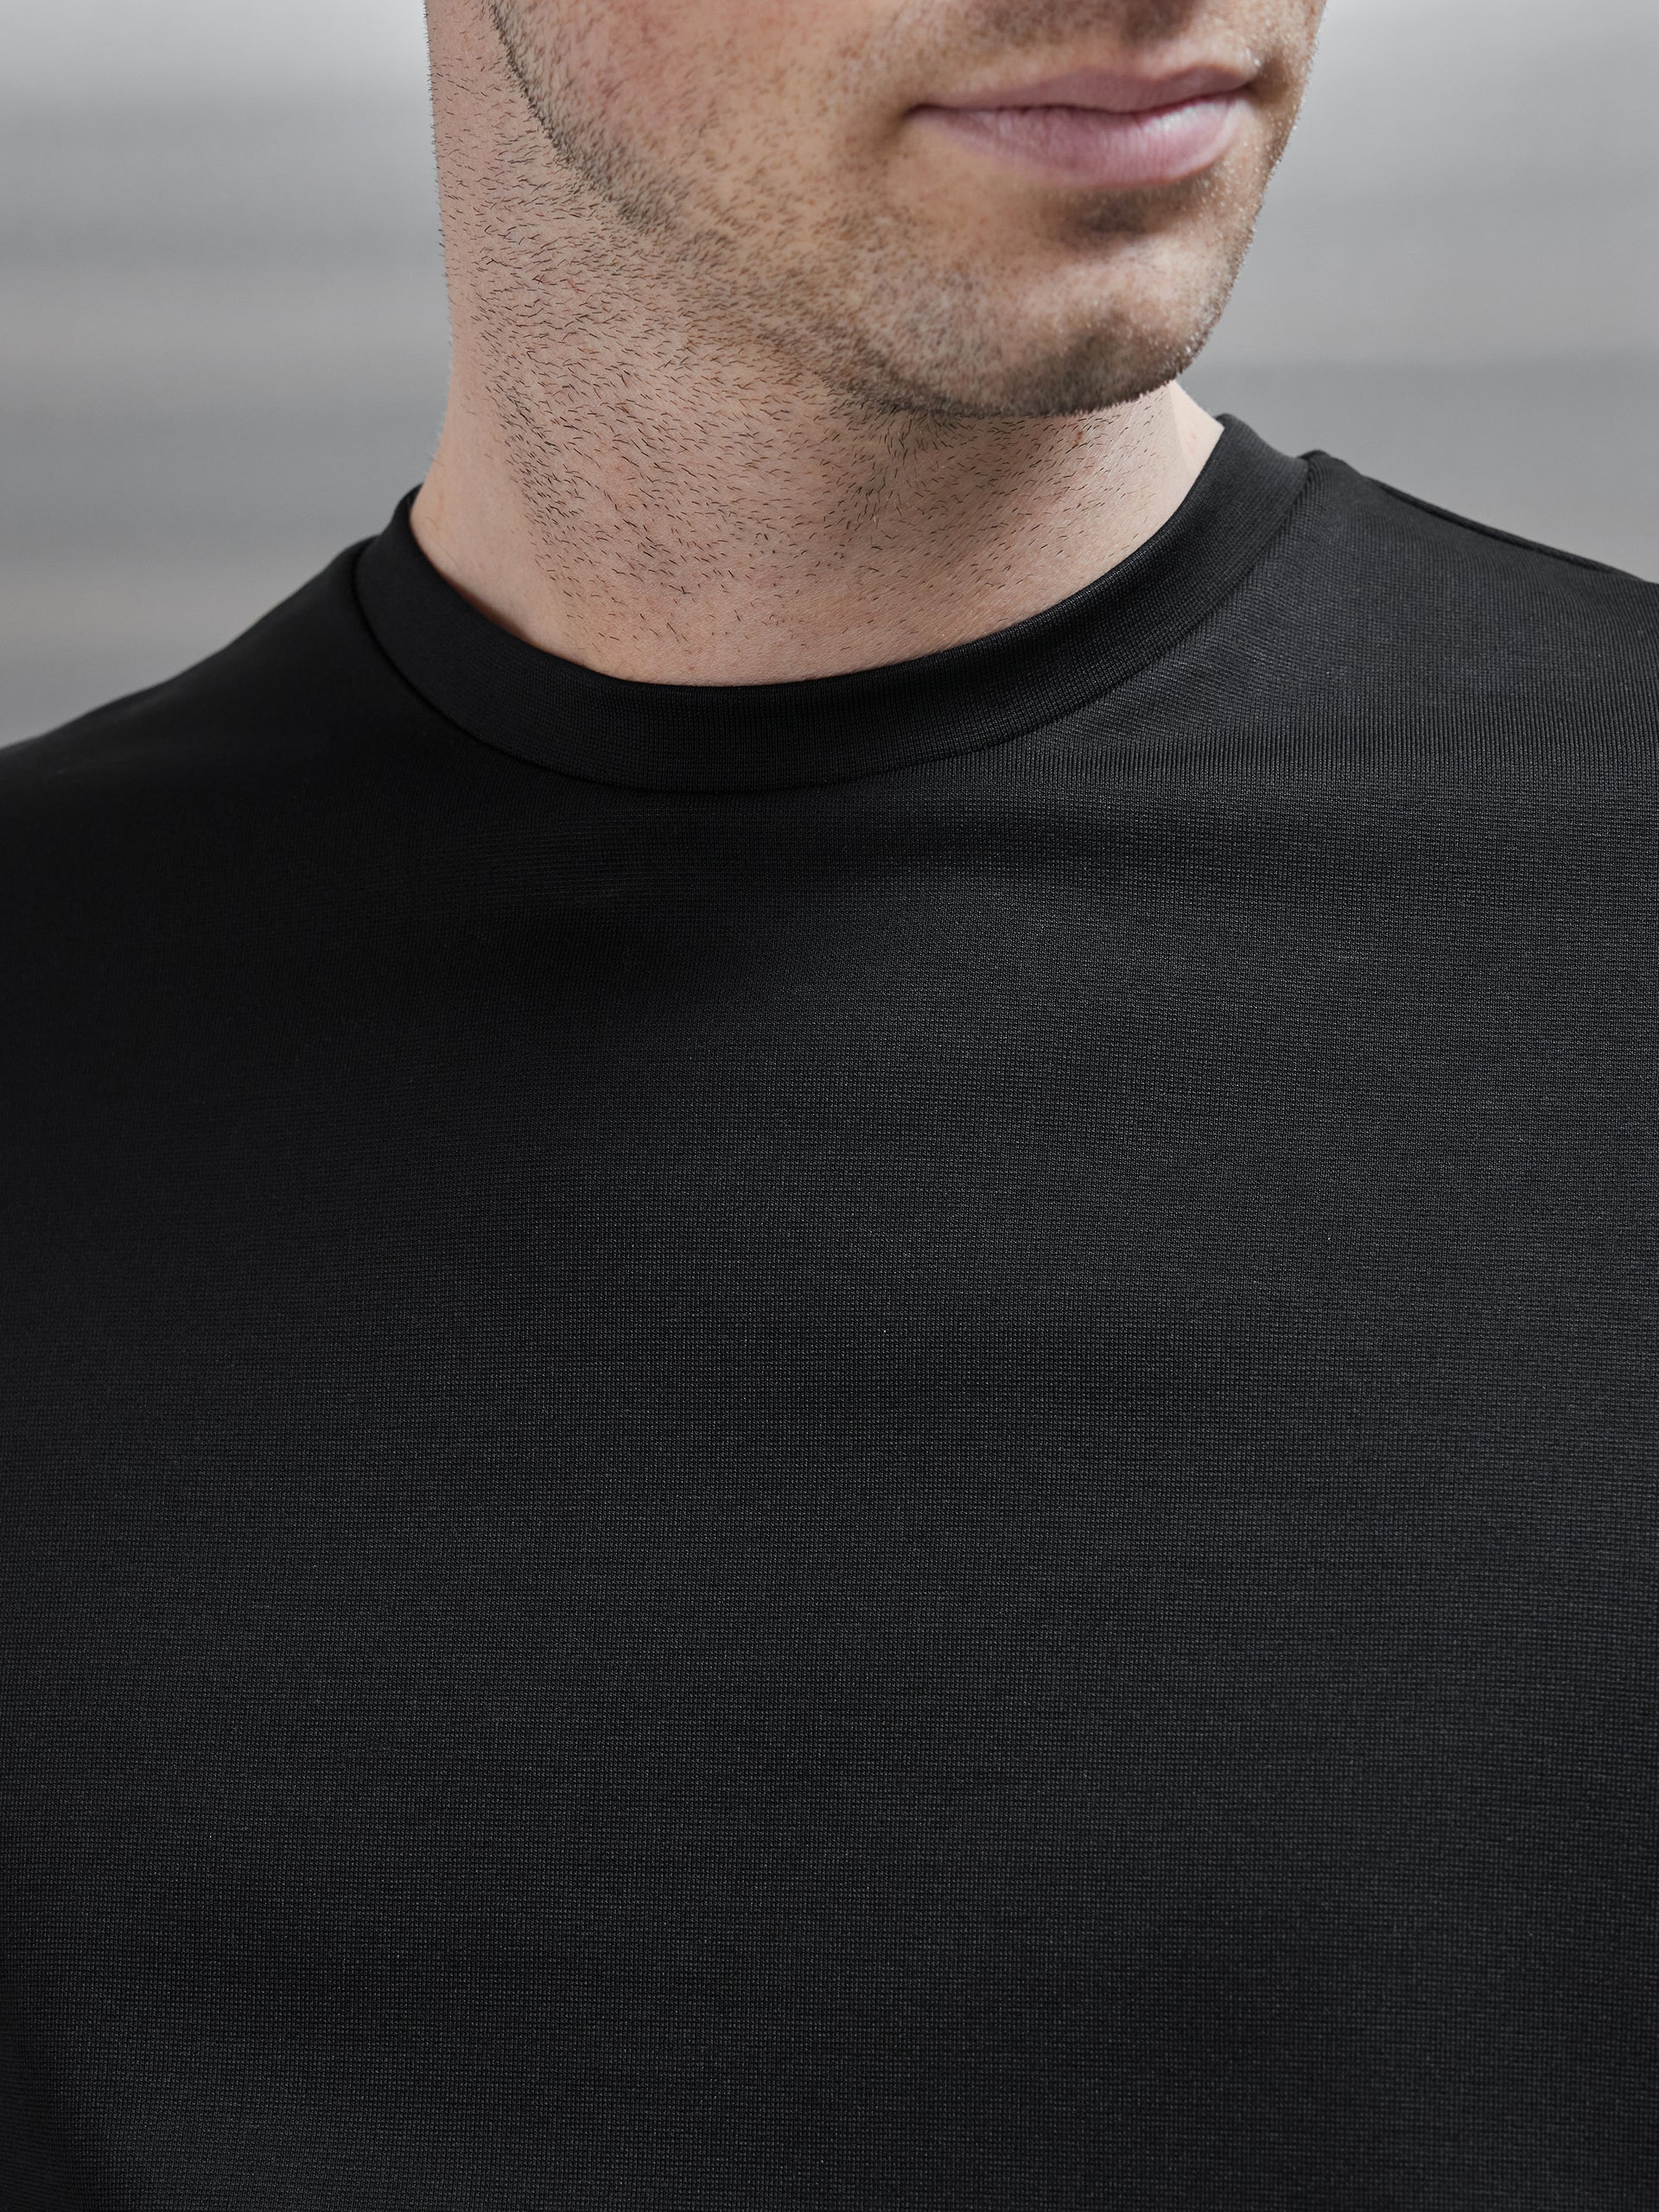 Luxe Essential T-Shirt in Black ARNE